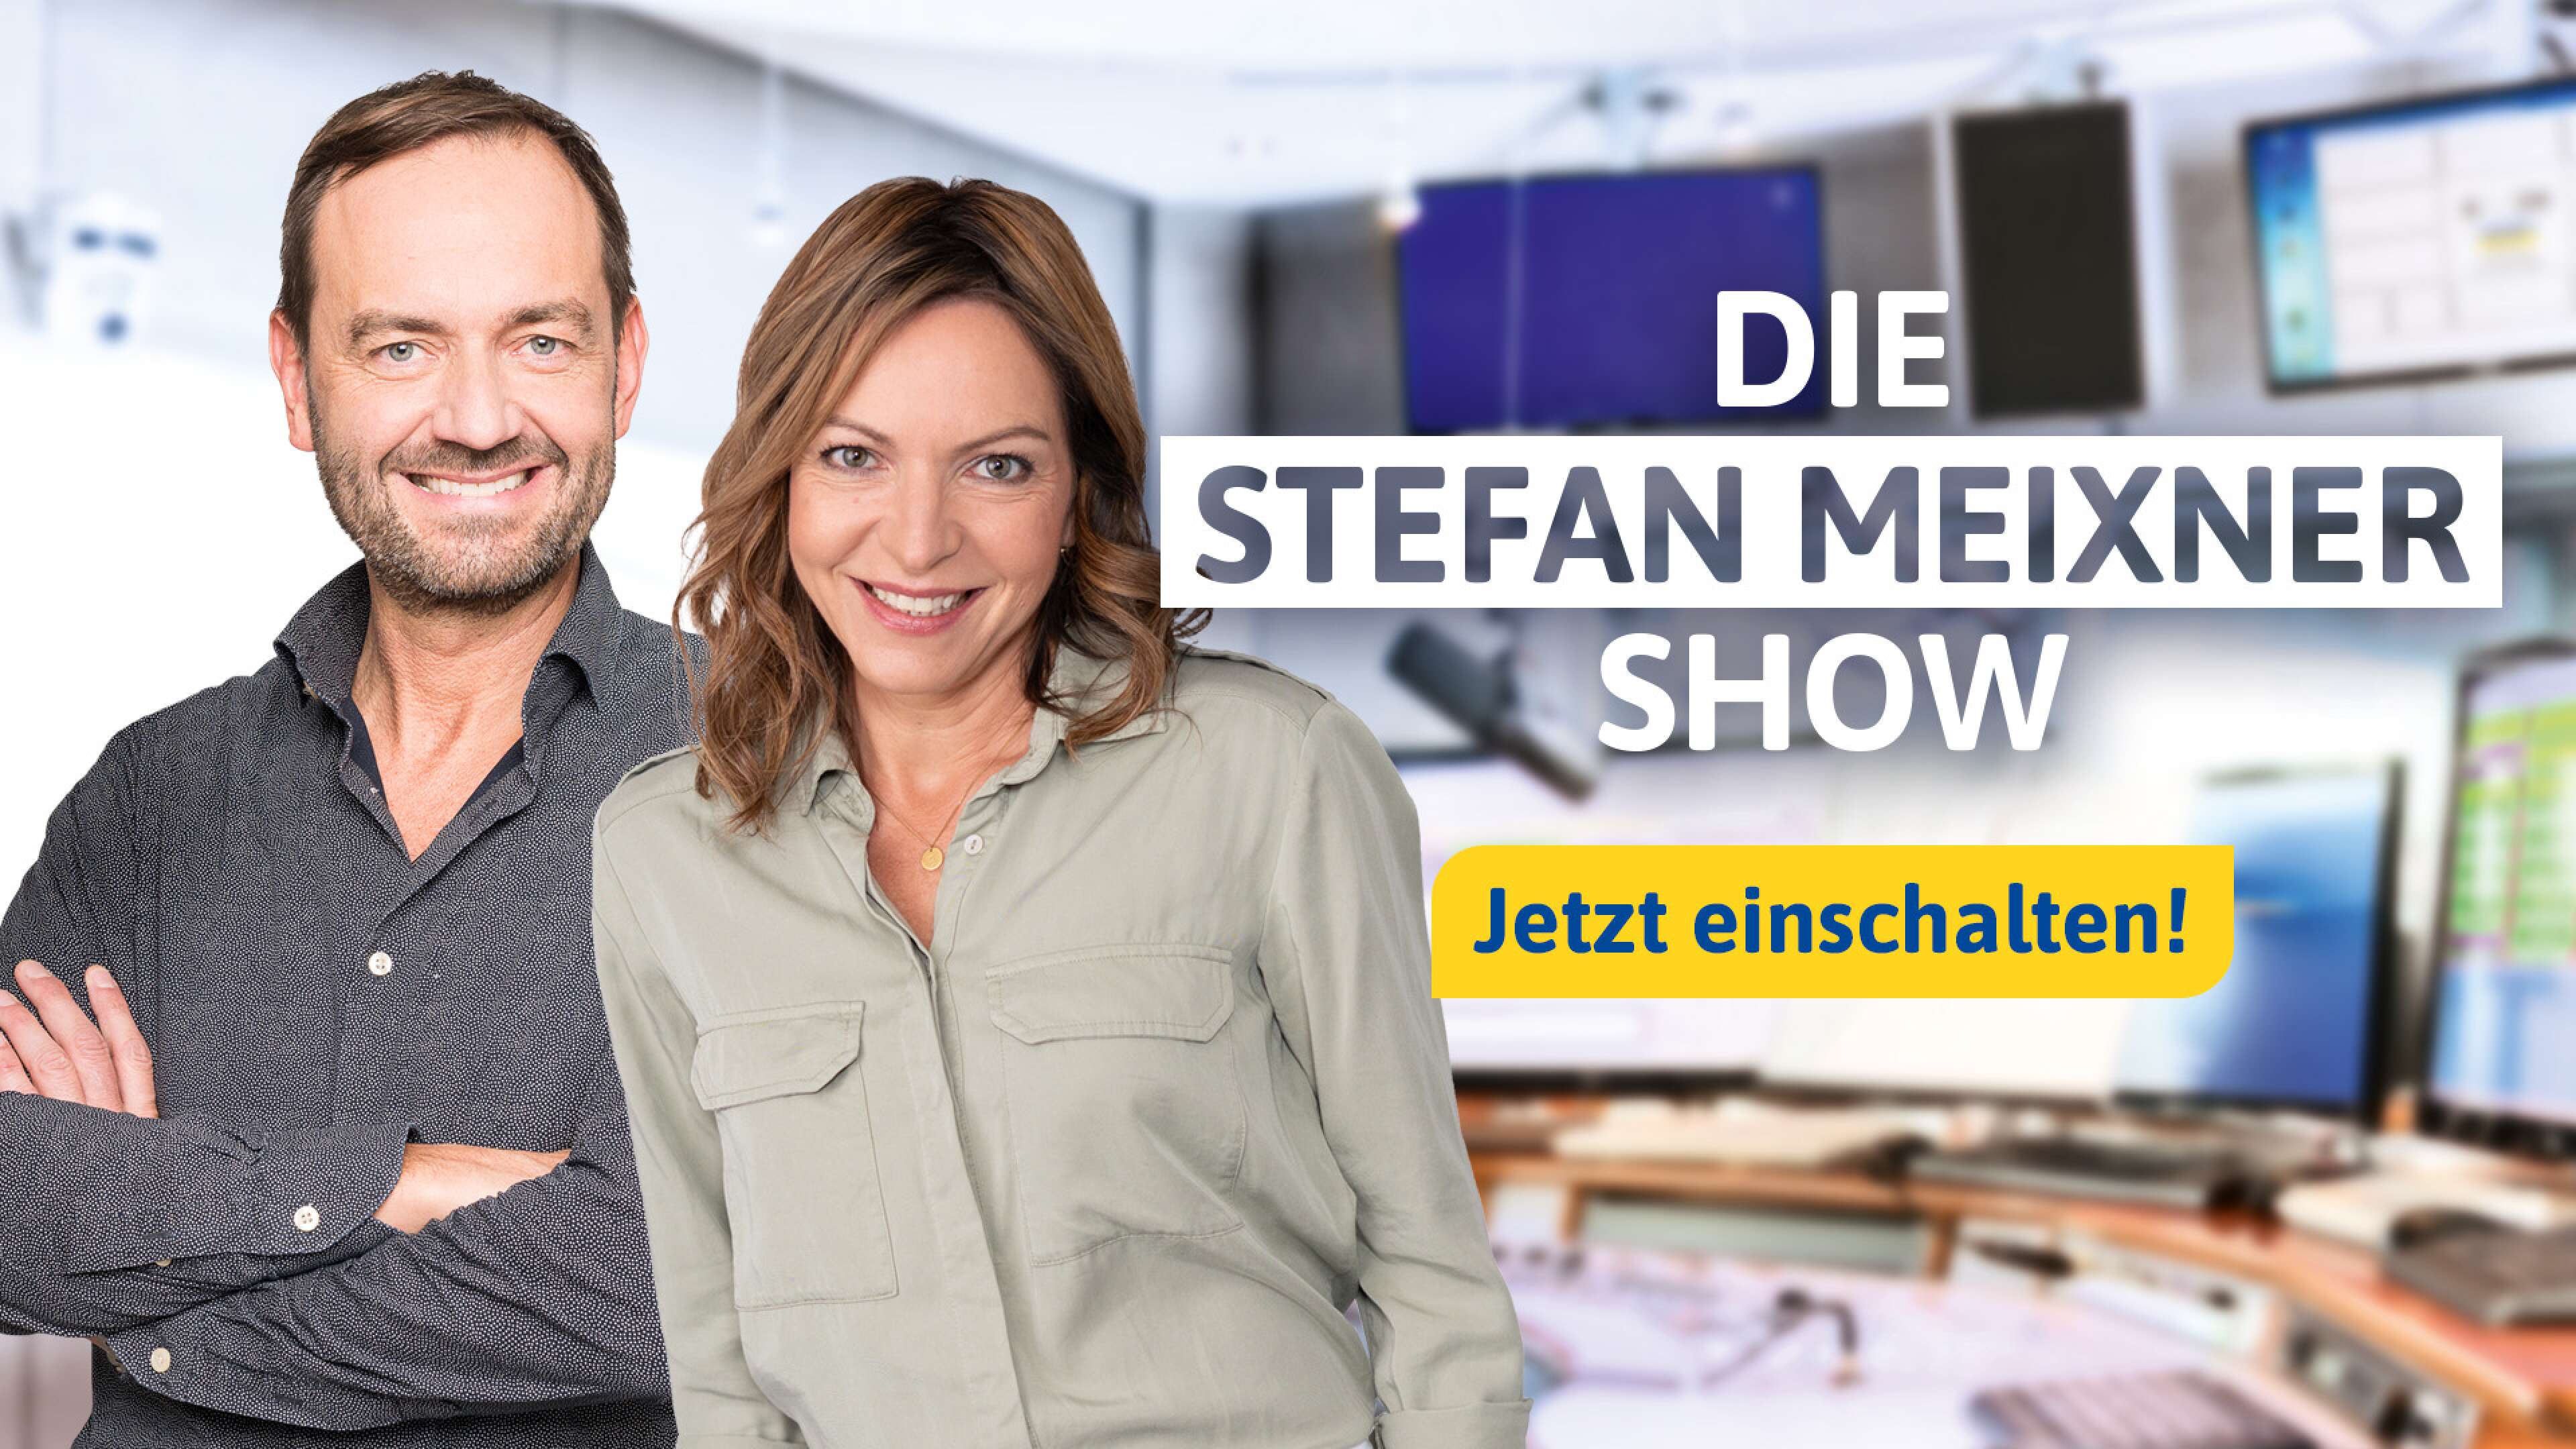 Die Stefan Meixner Show